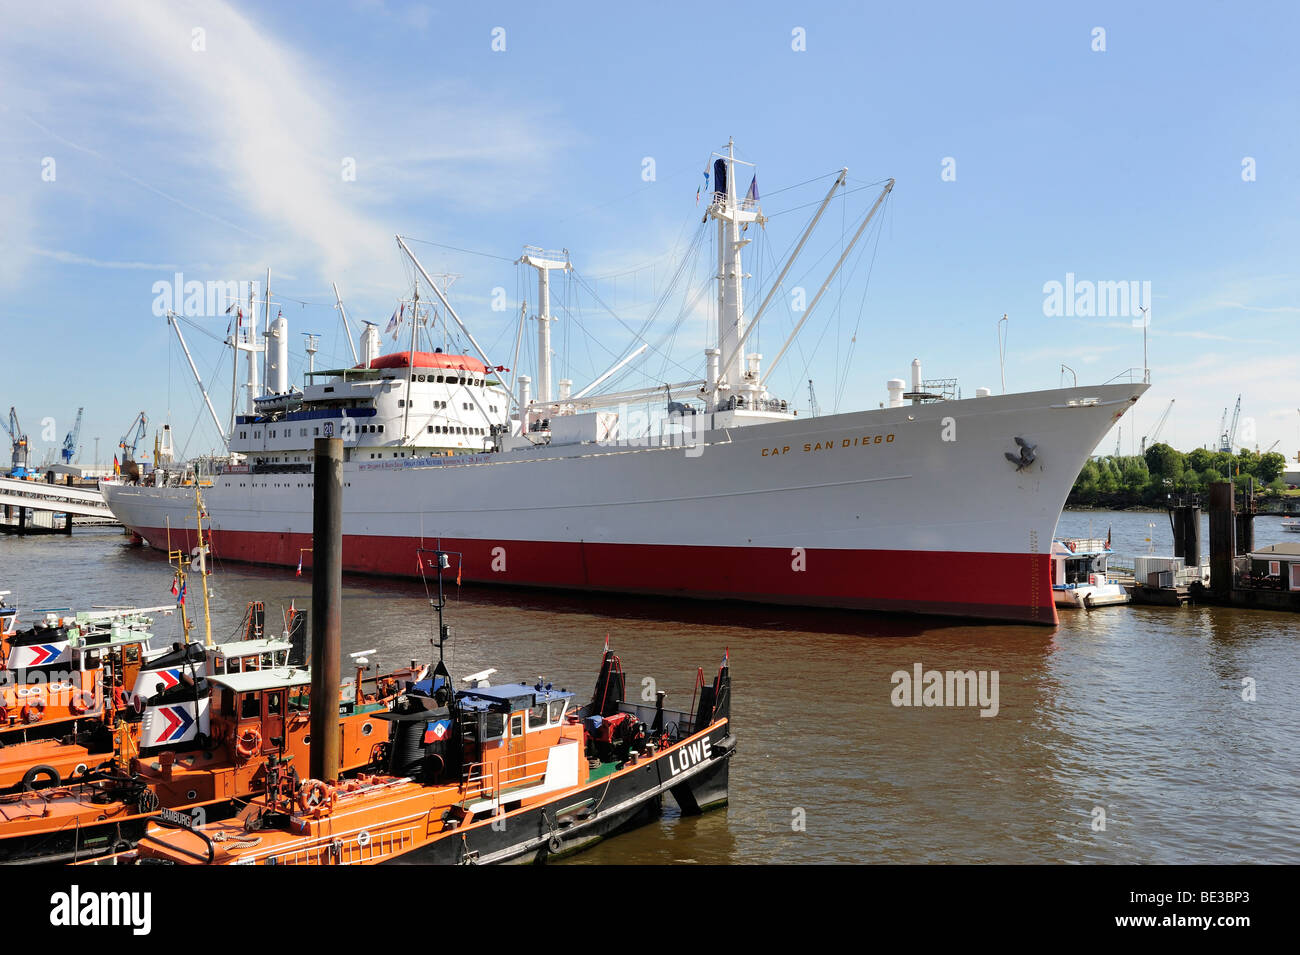 Cap San Diego, biggest seaworthy cargoship-museum worldwide, Hamburg, Germany, Europe Stock Photo